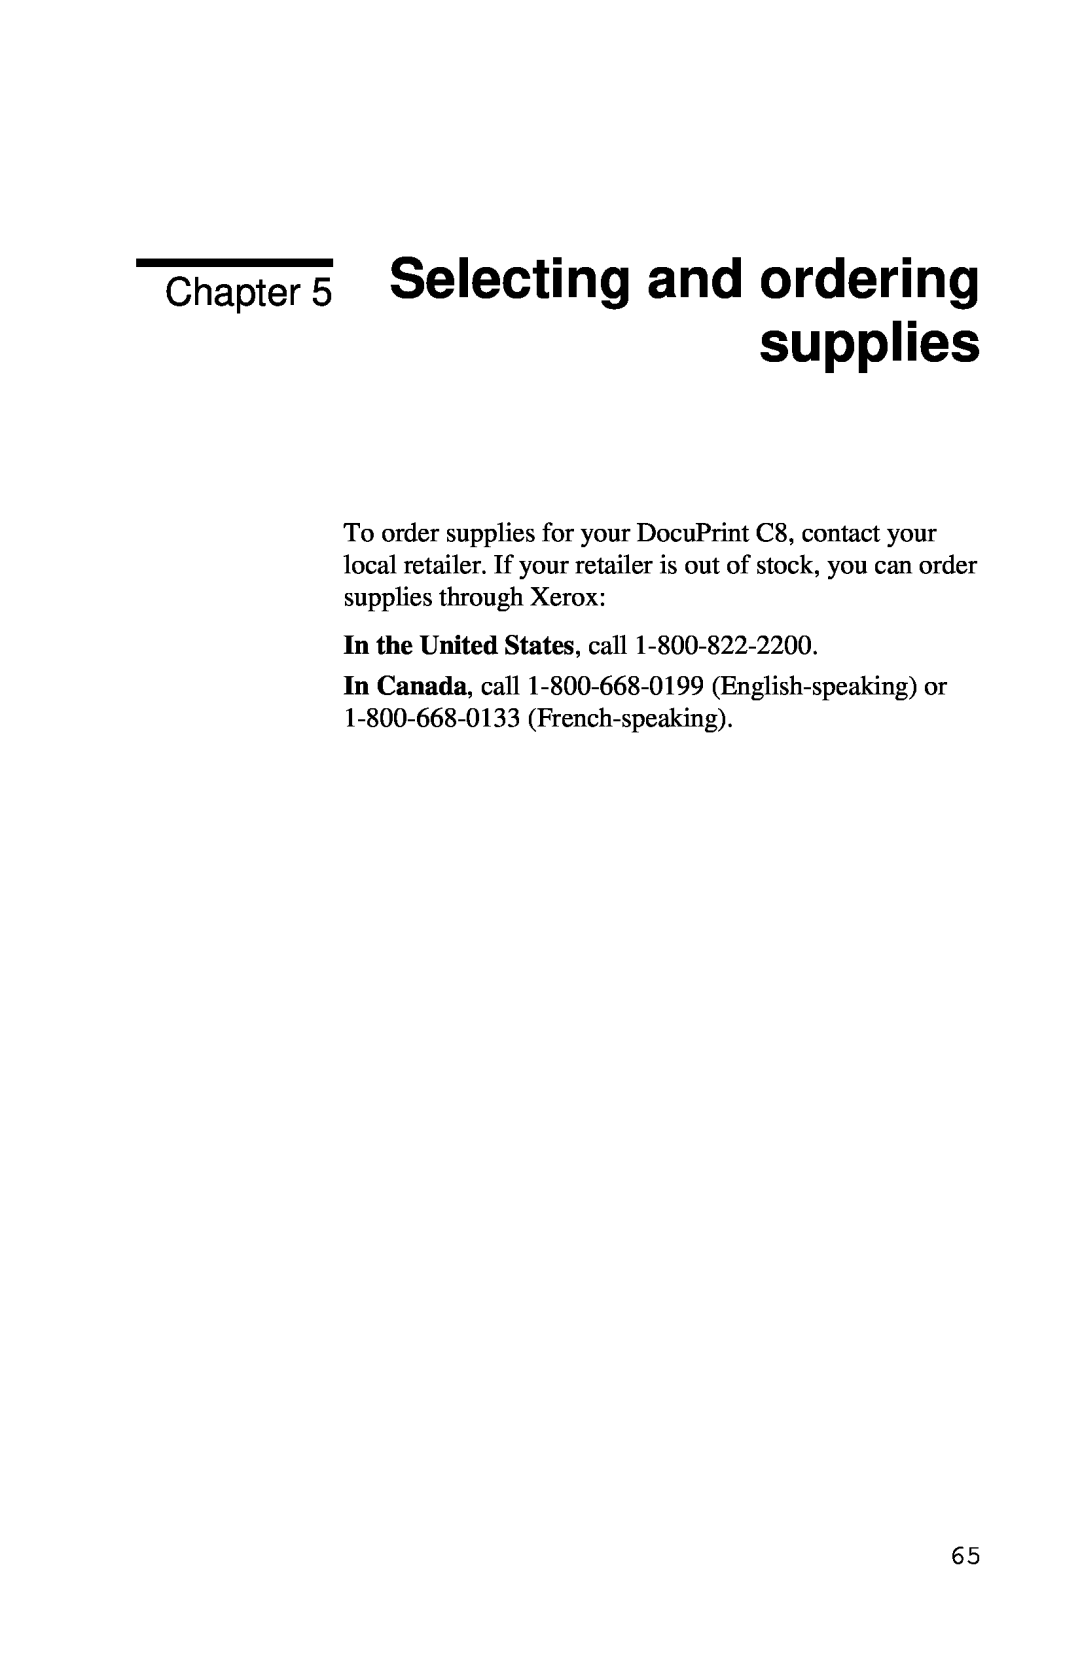 Xerox Inkjet Printer manual Selecting and ordering supplies 